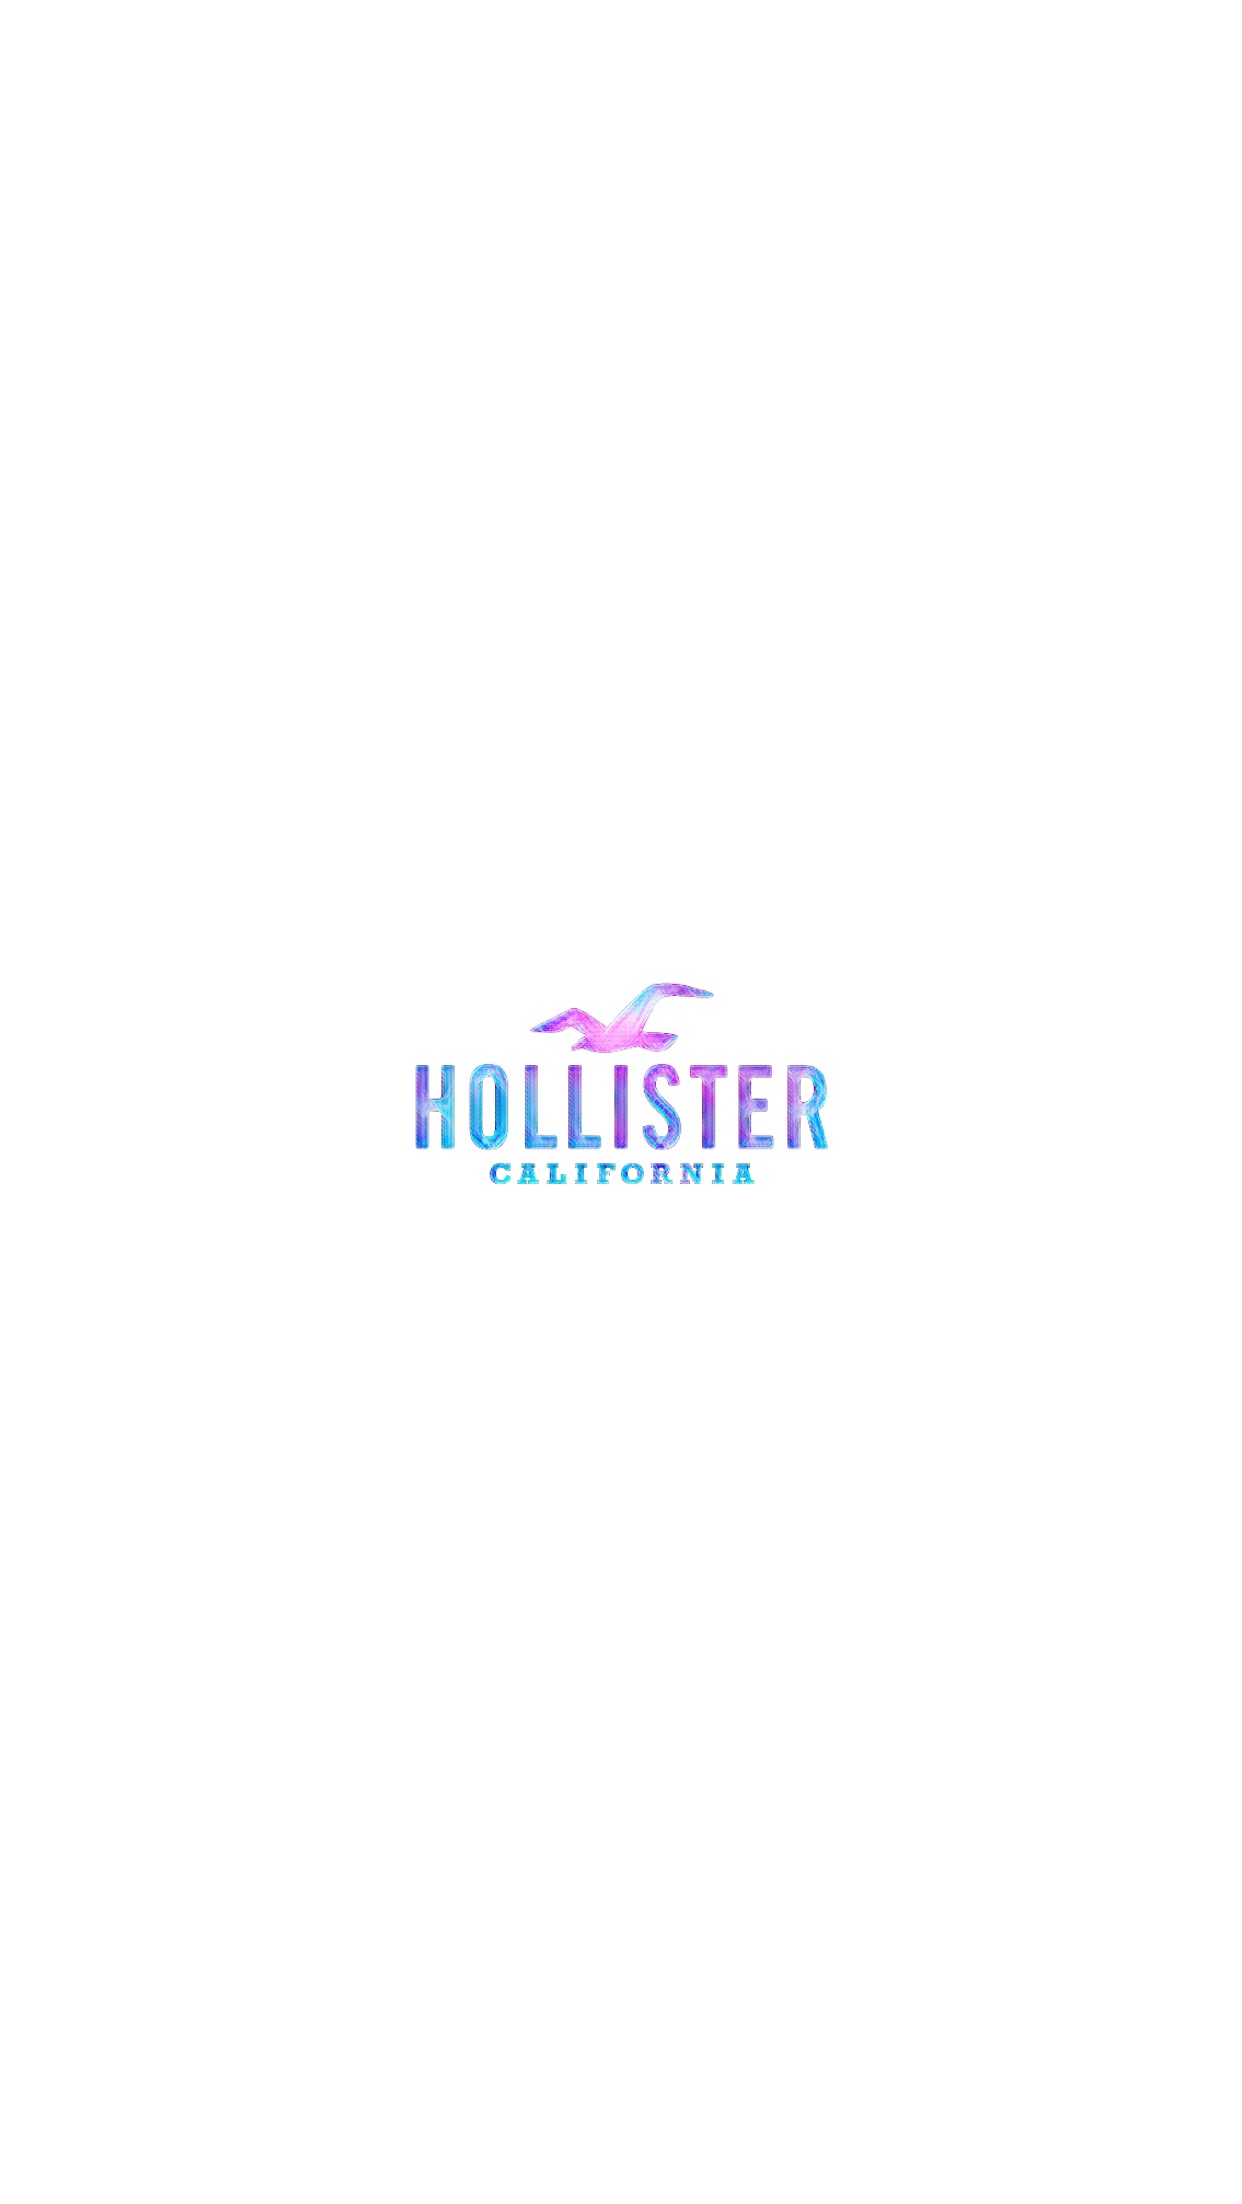 Holister Backgrounds